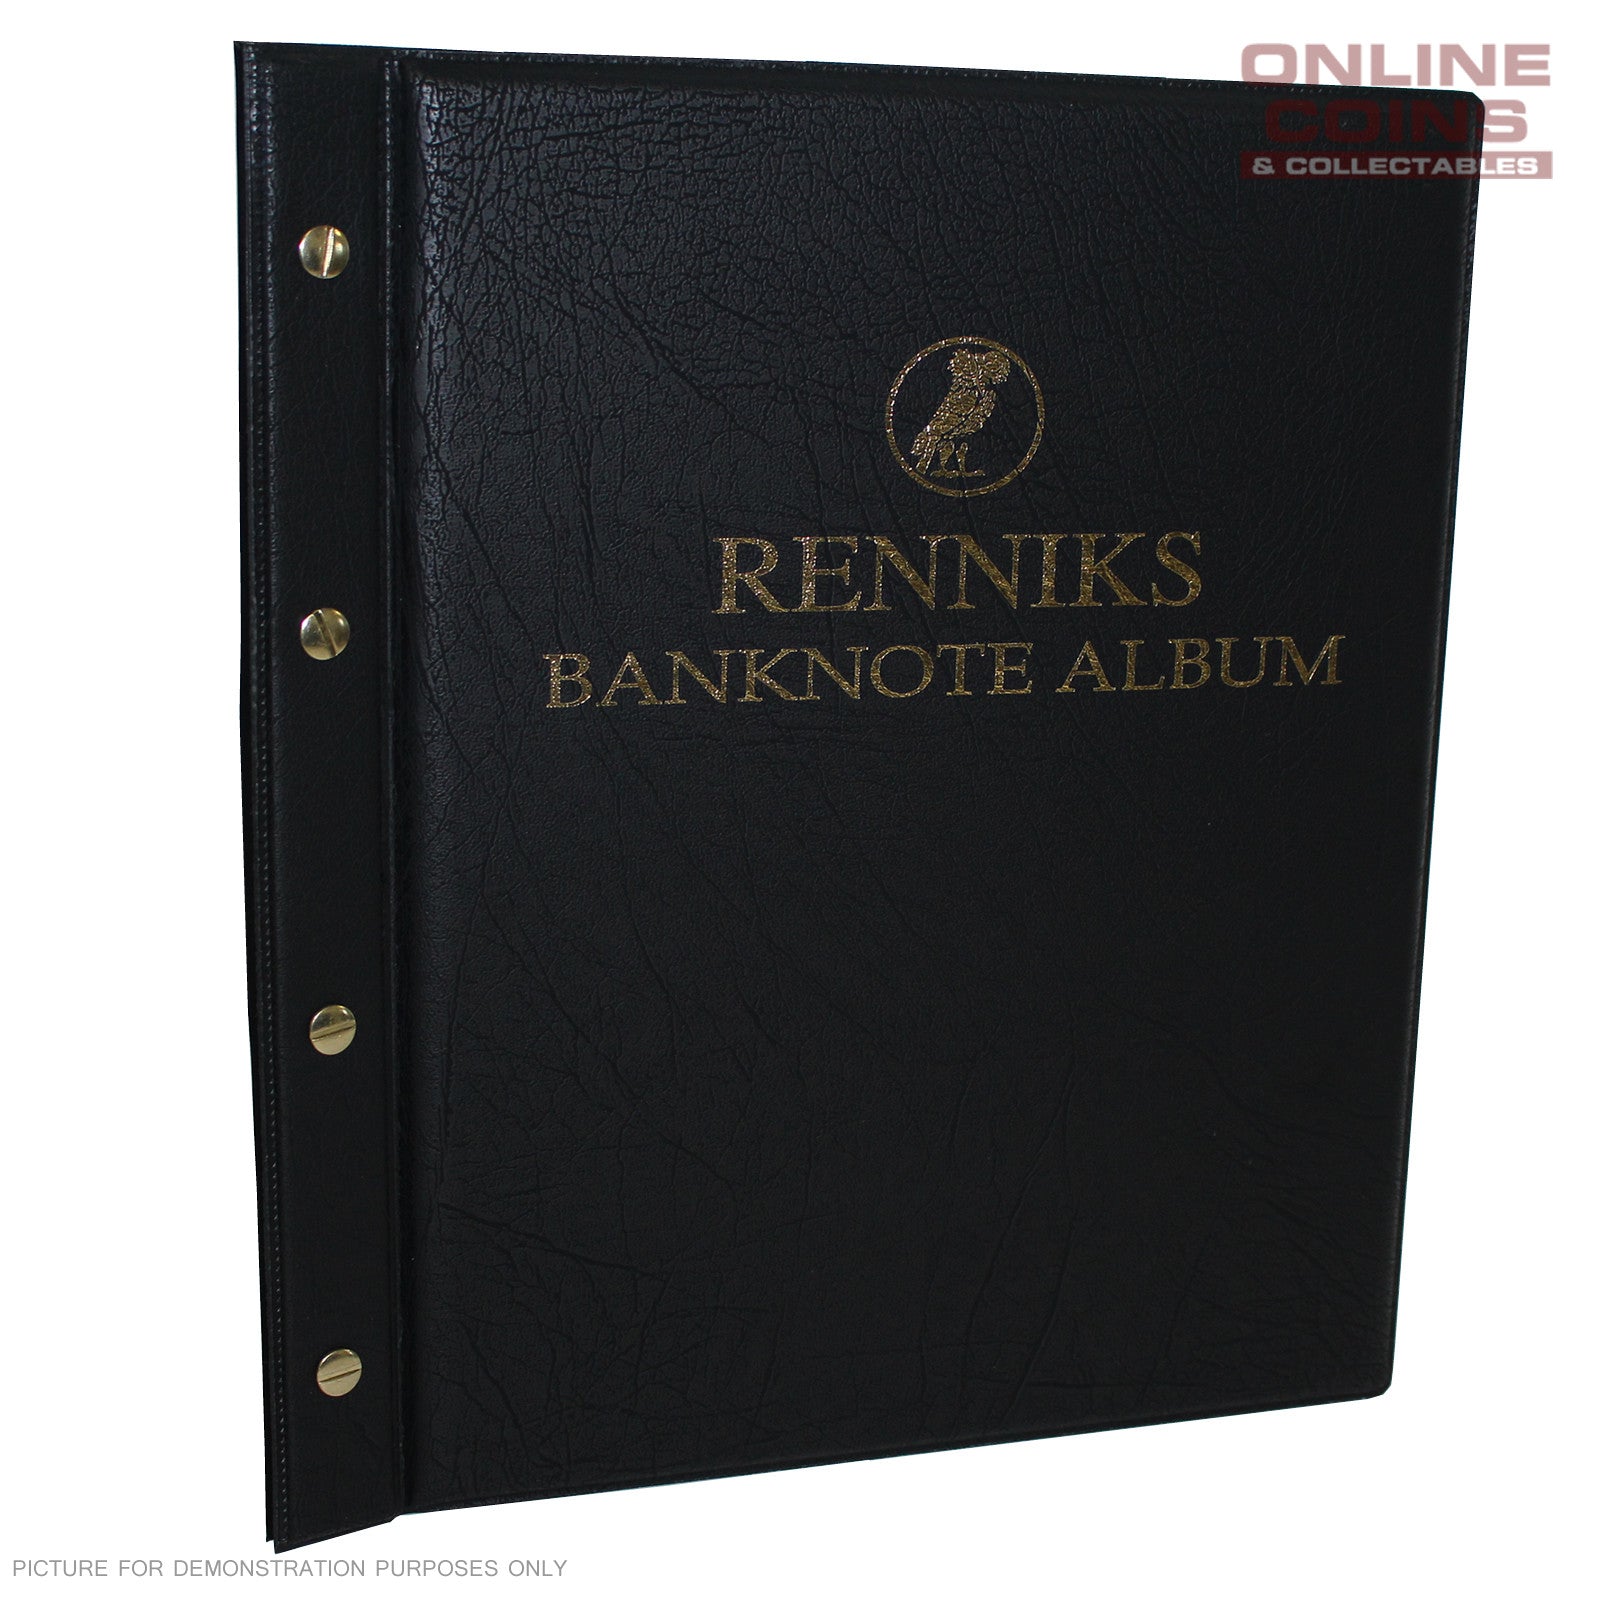 RENNIKS Banknote Album including 6 Note Album Pages - BLACK